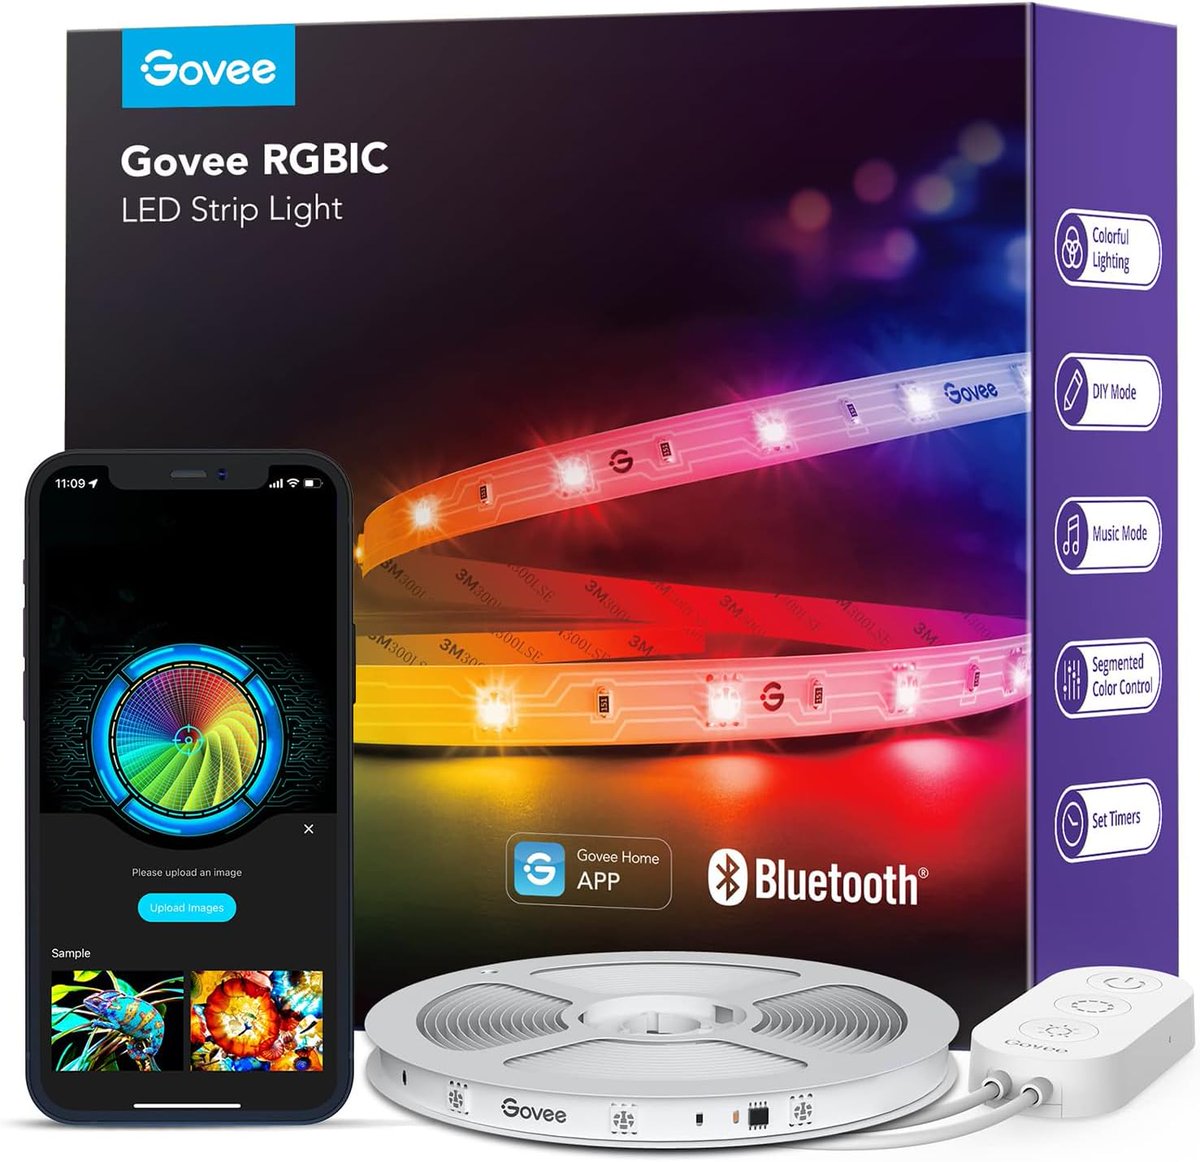 Govee RGBIC LED Strip Lights, 16.4ft is $17.99 (28% OFF) on Amazon amzn.to/4bJiwVS #ad